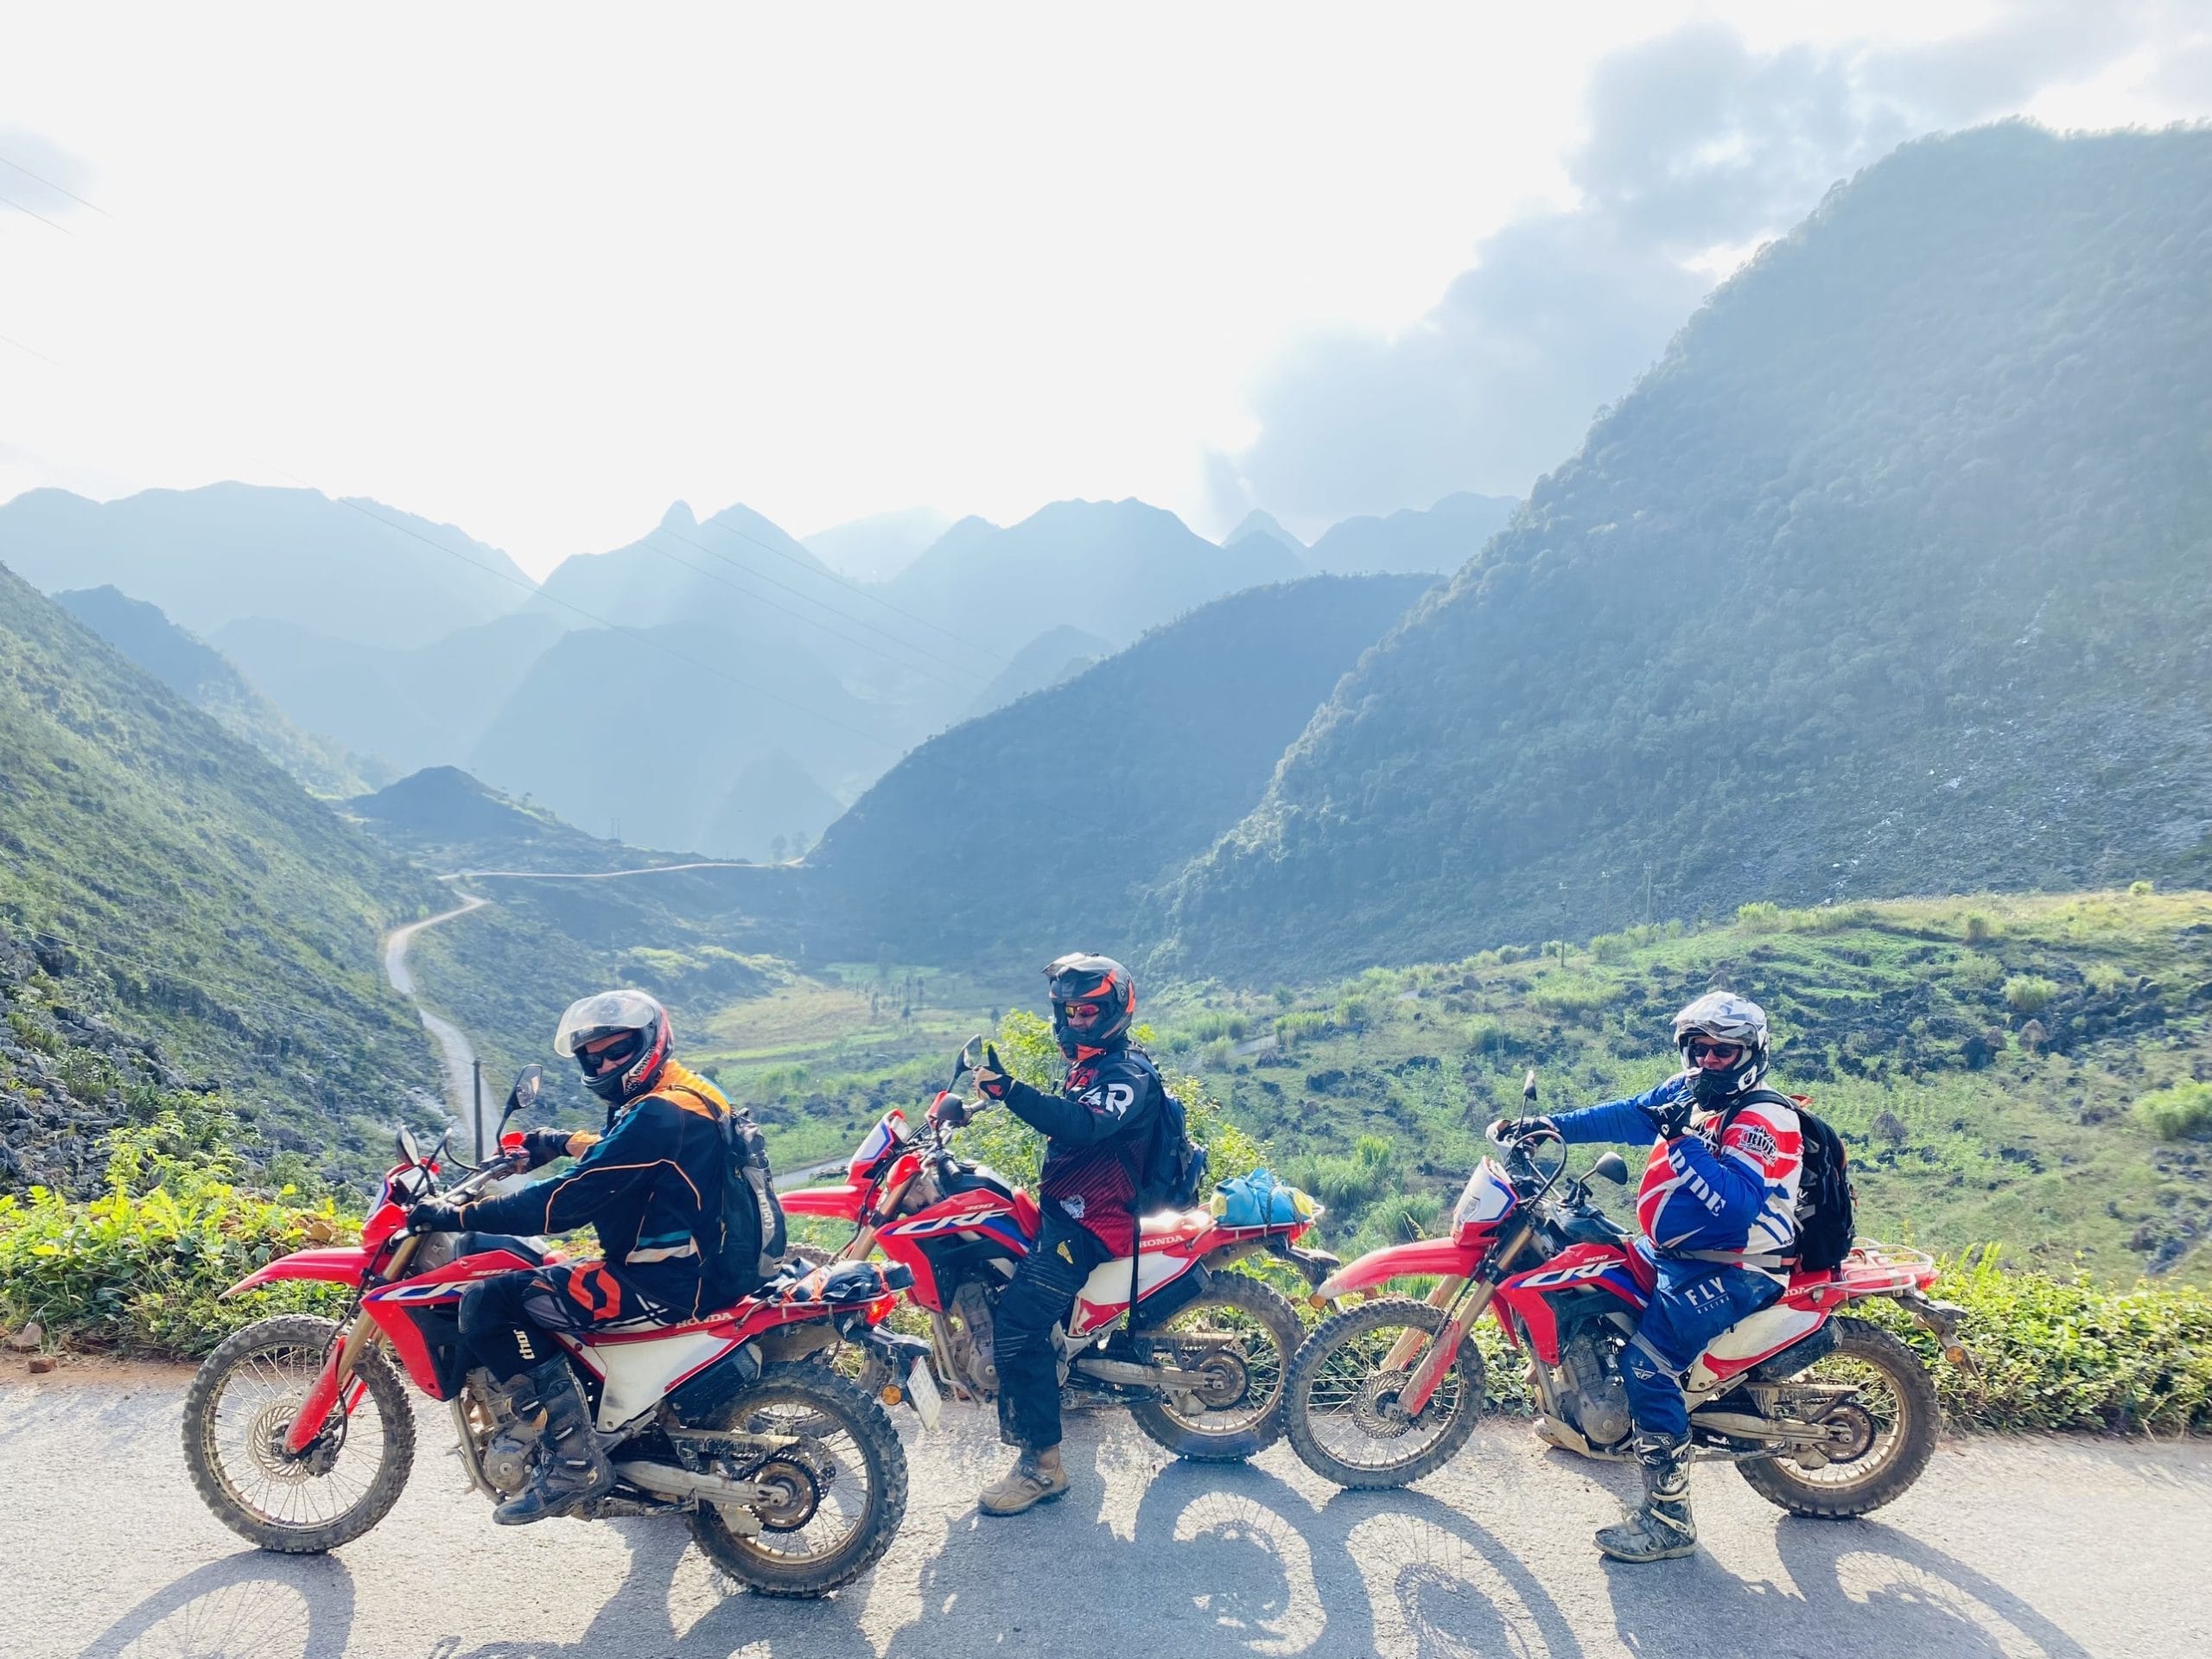 Picturesque Vietnam Motorcycle Tour to Ha Giang, Ban Gioc Waterfall, Mau Son peak